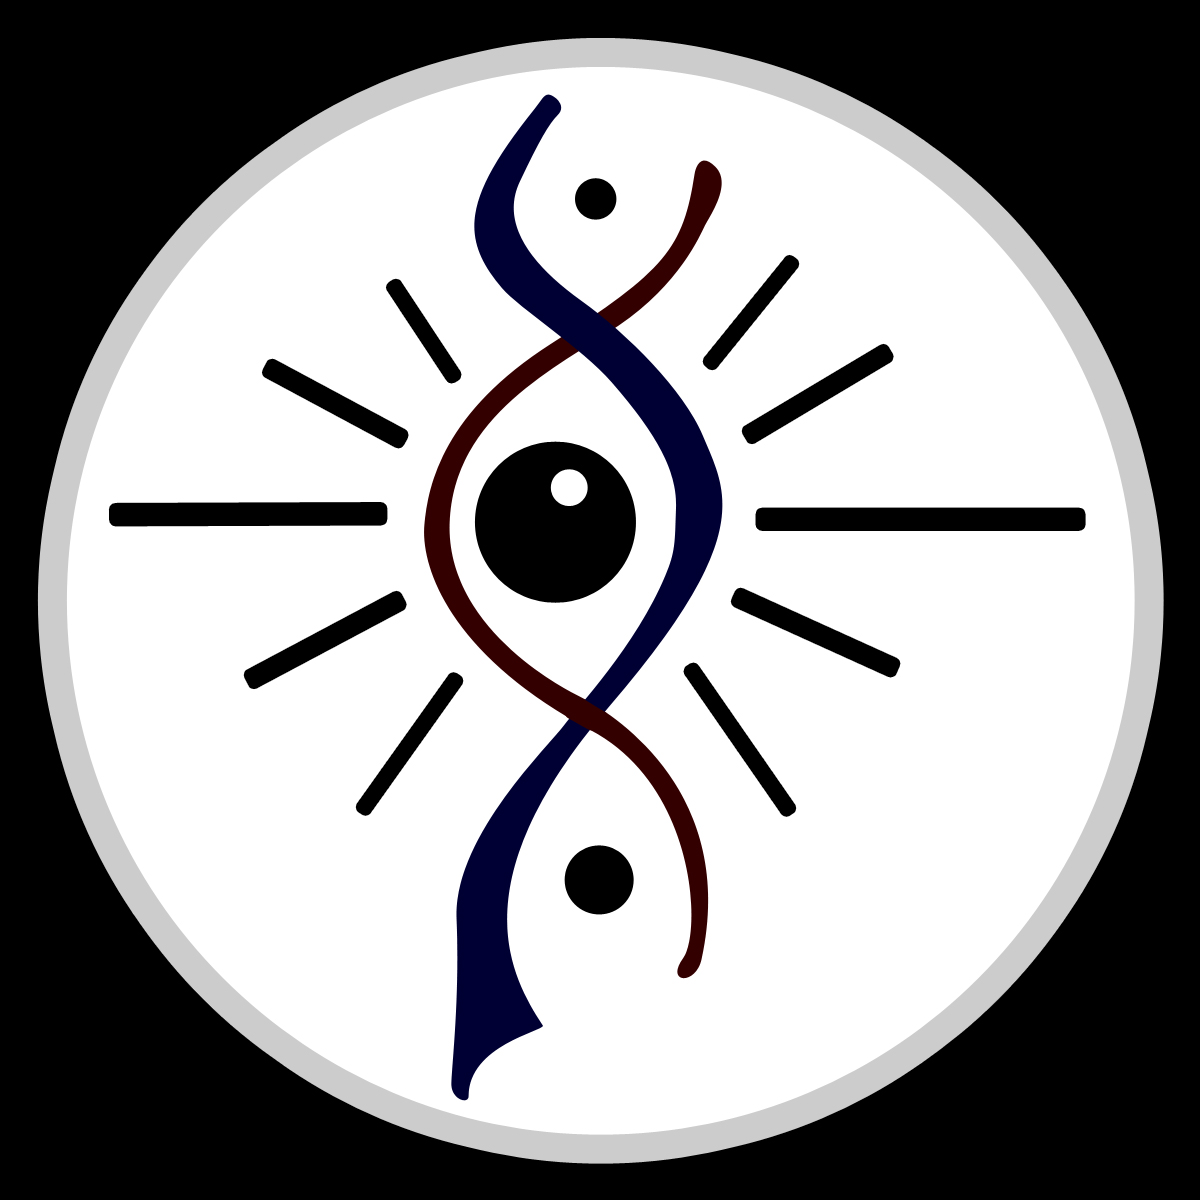 DnA band logo